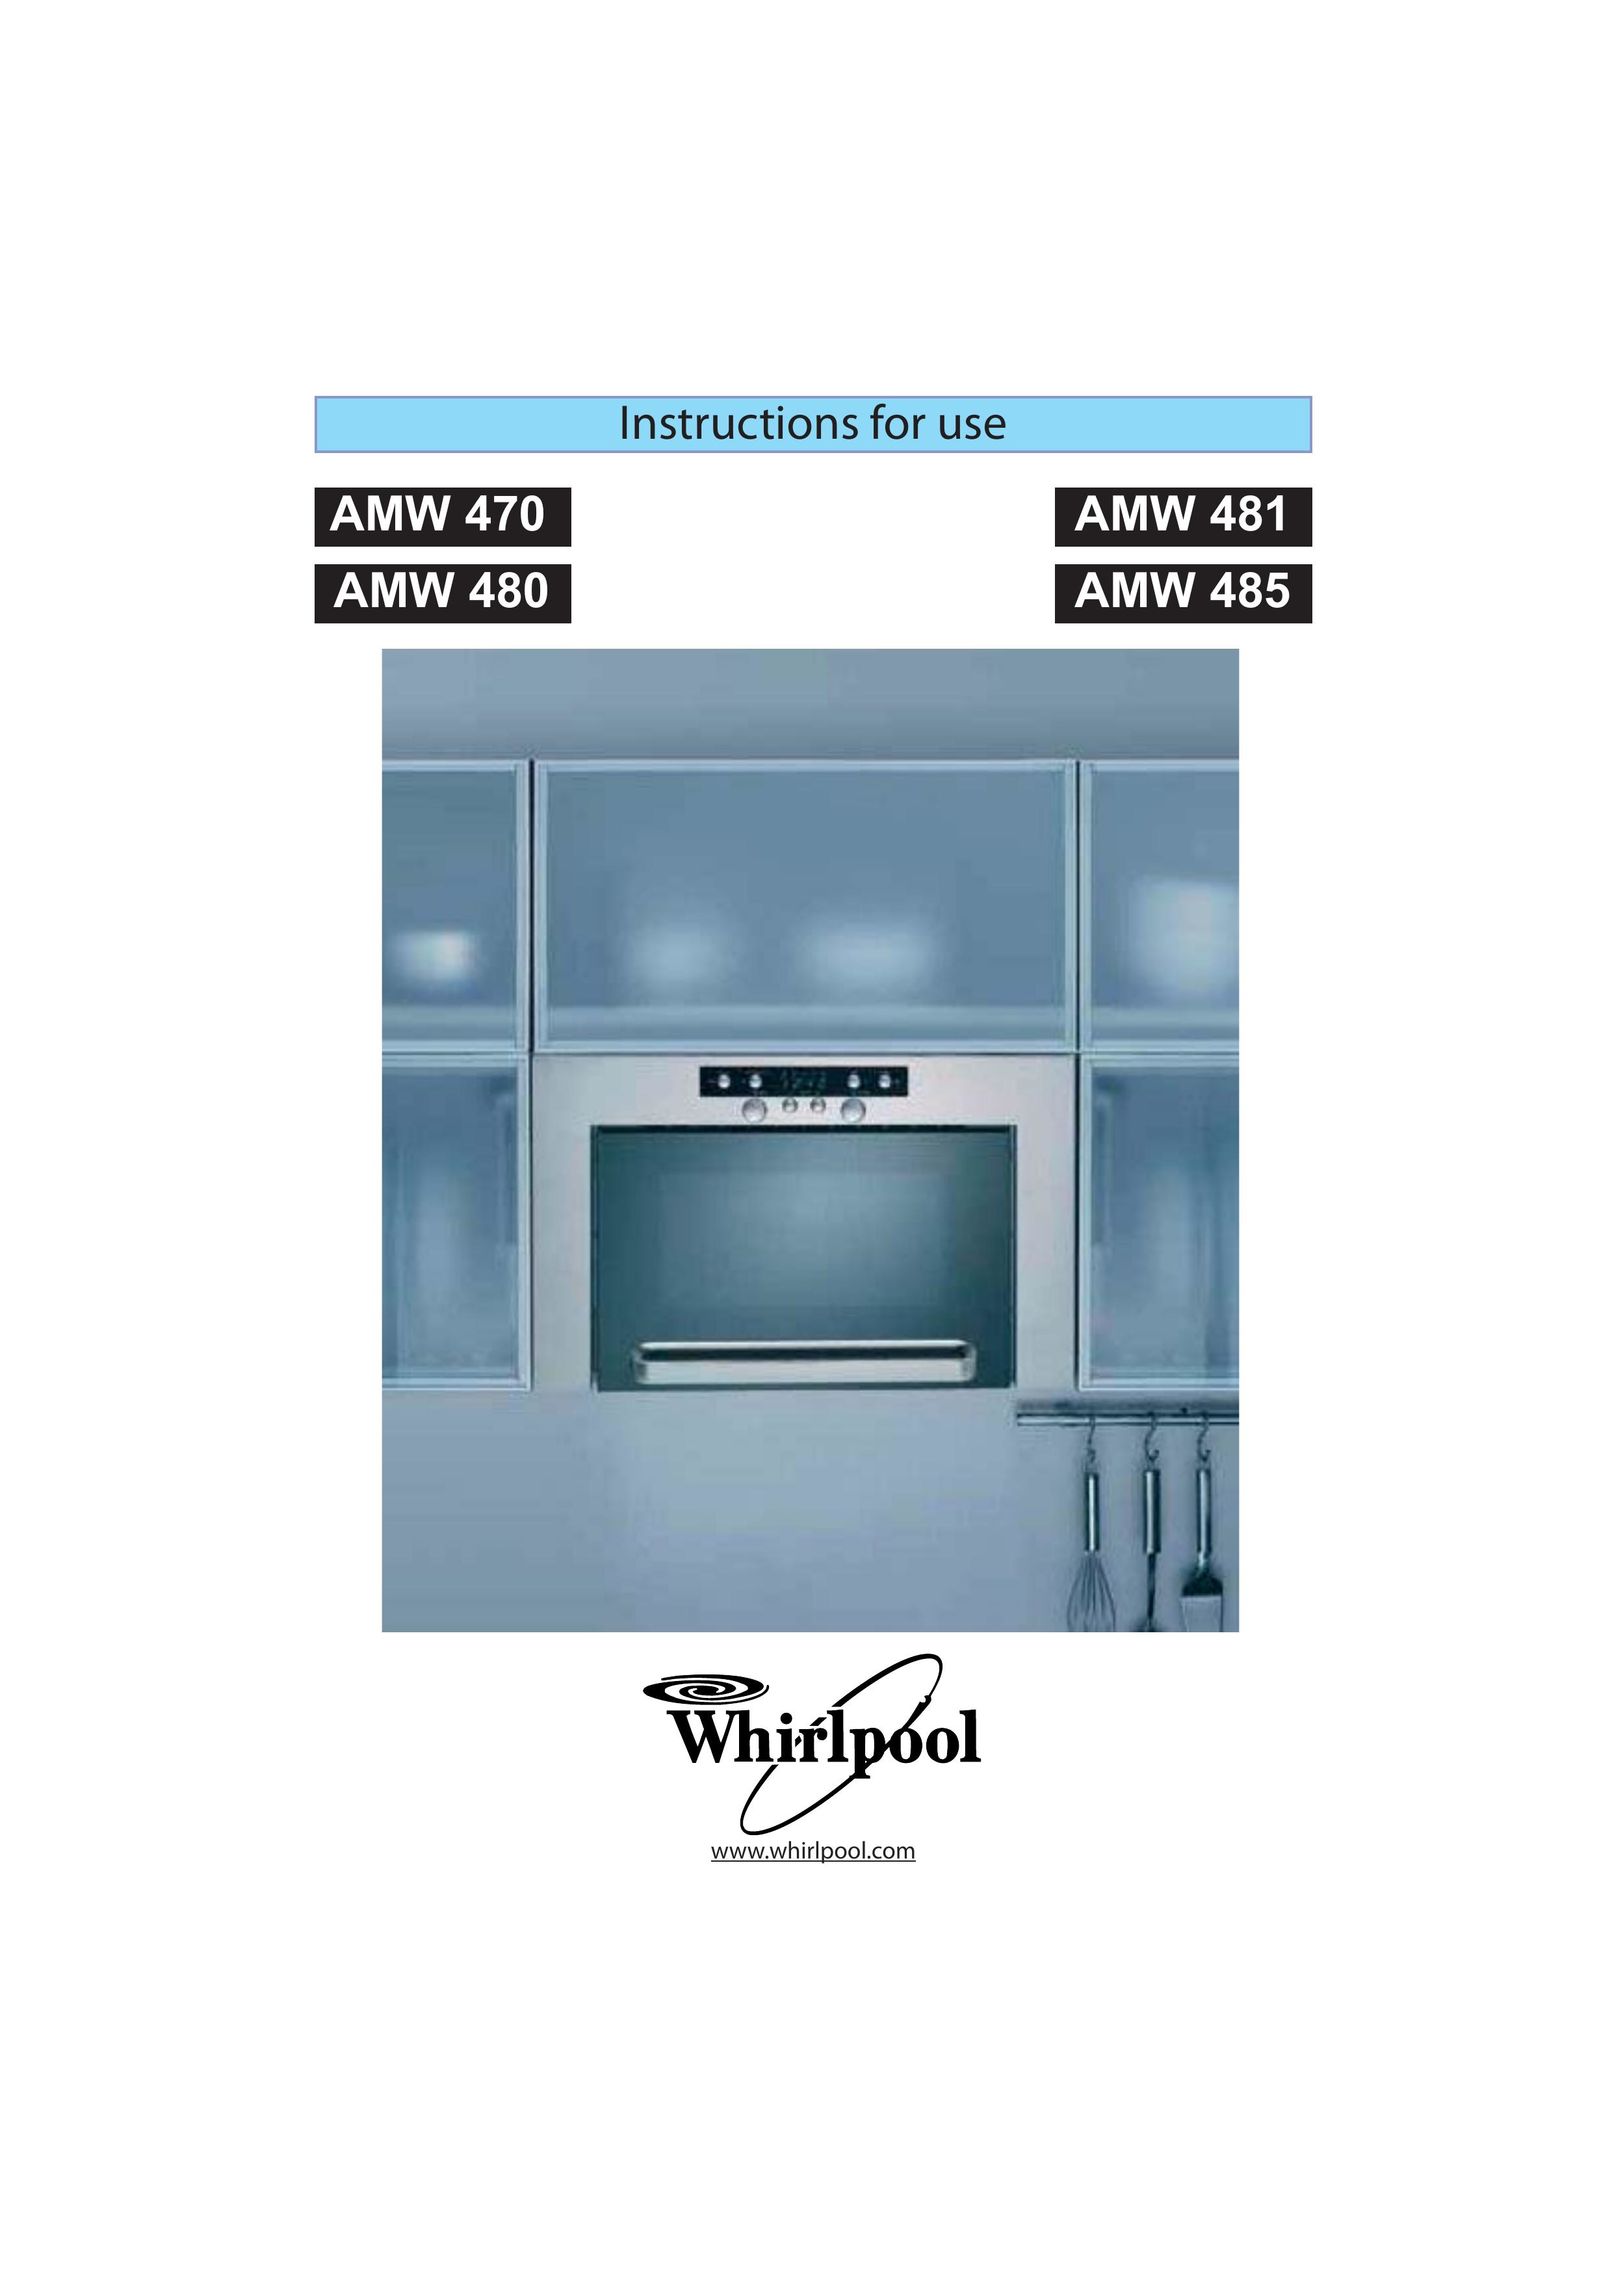 Whirlpool AMW 481 Microwave Oven User Manual